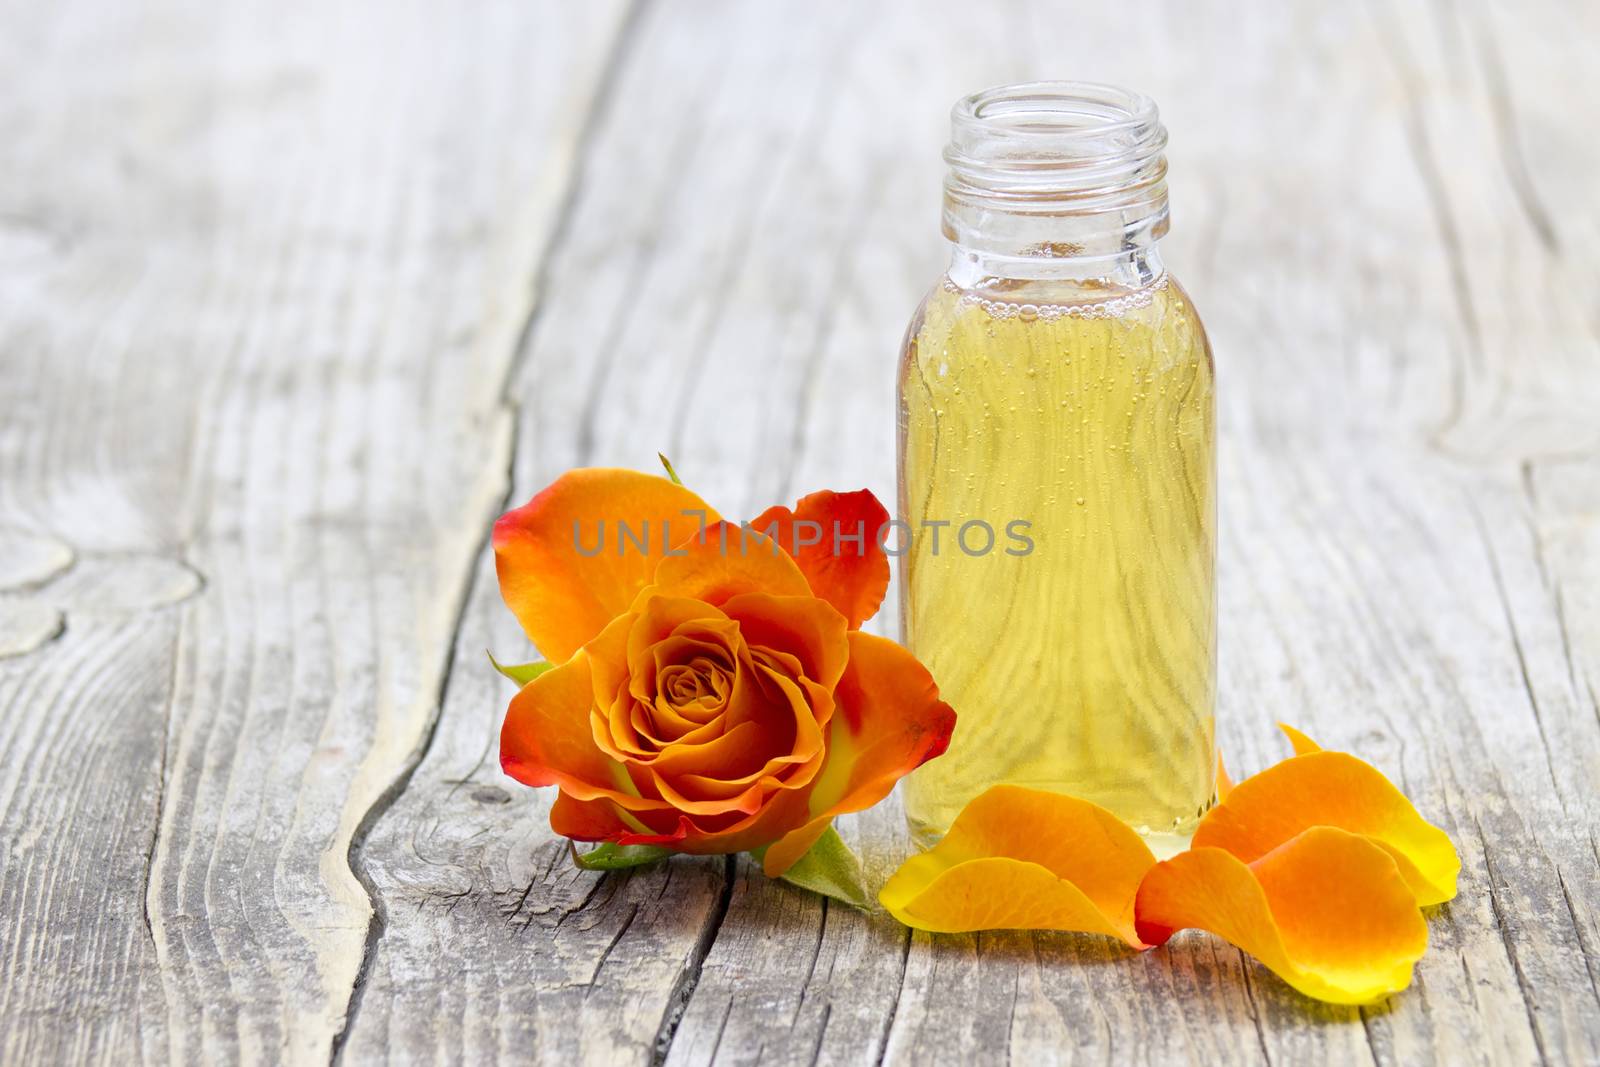 bath oil and orange rose on old wooden background